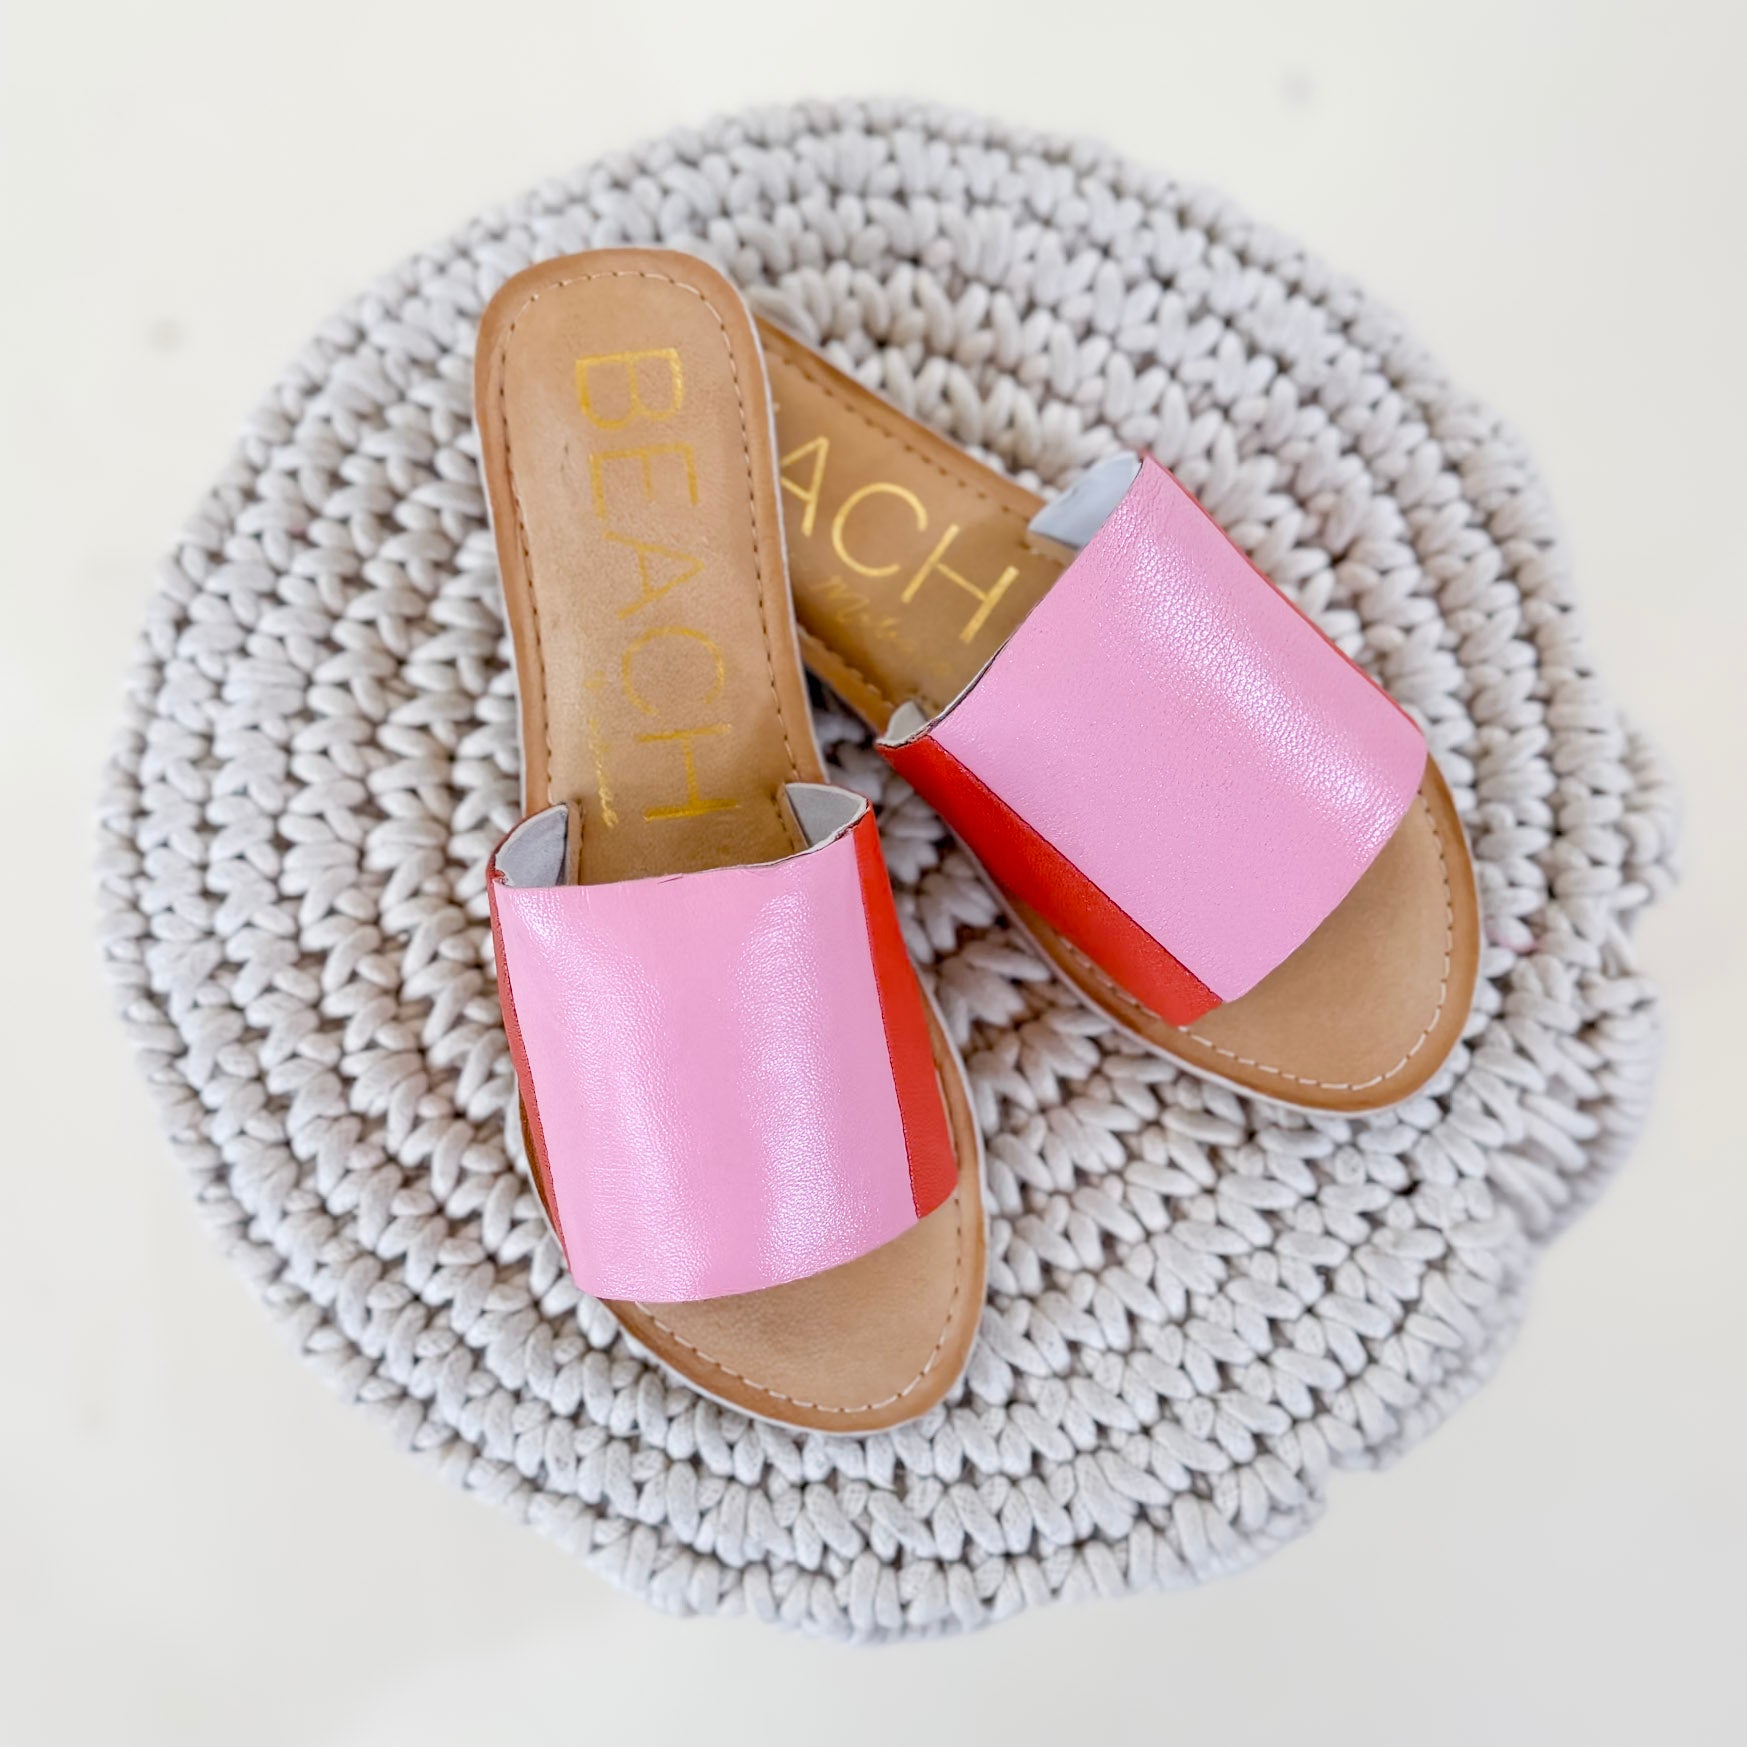 Matisse | Bonfire Slide Sandal in Pink and Red - Giddy Up Glamour Boutique